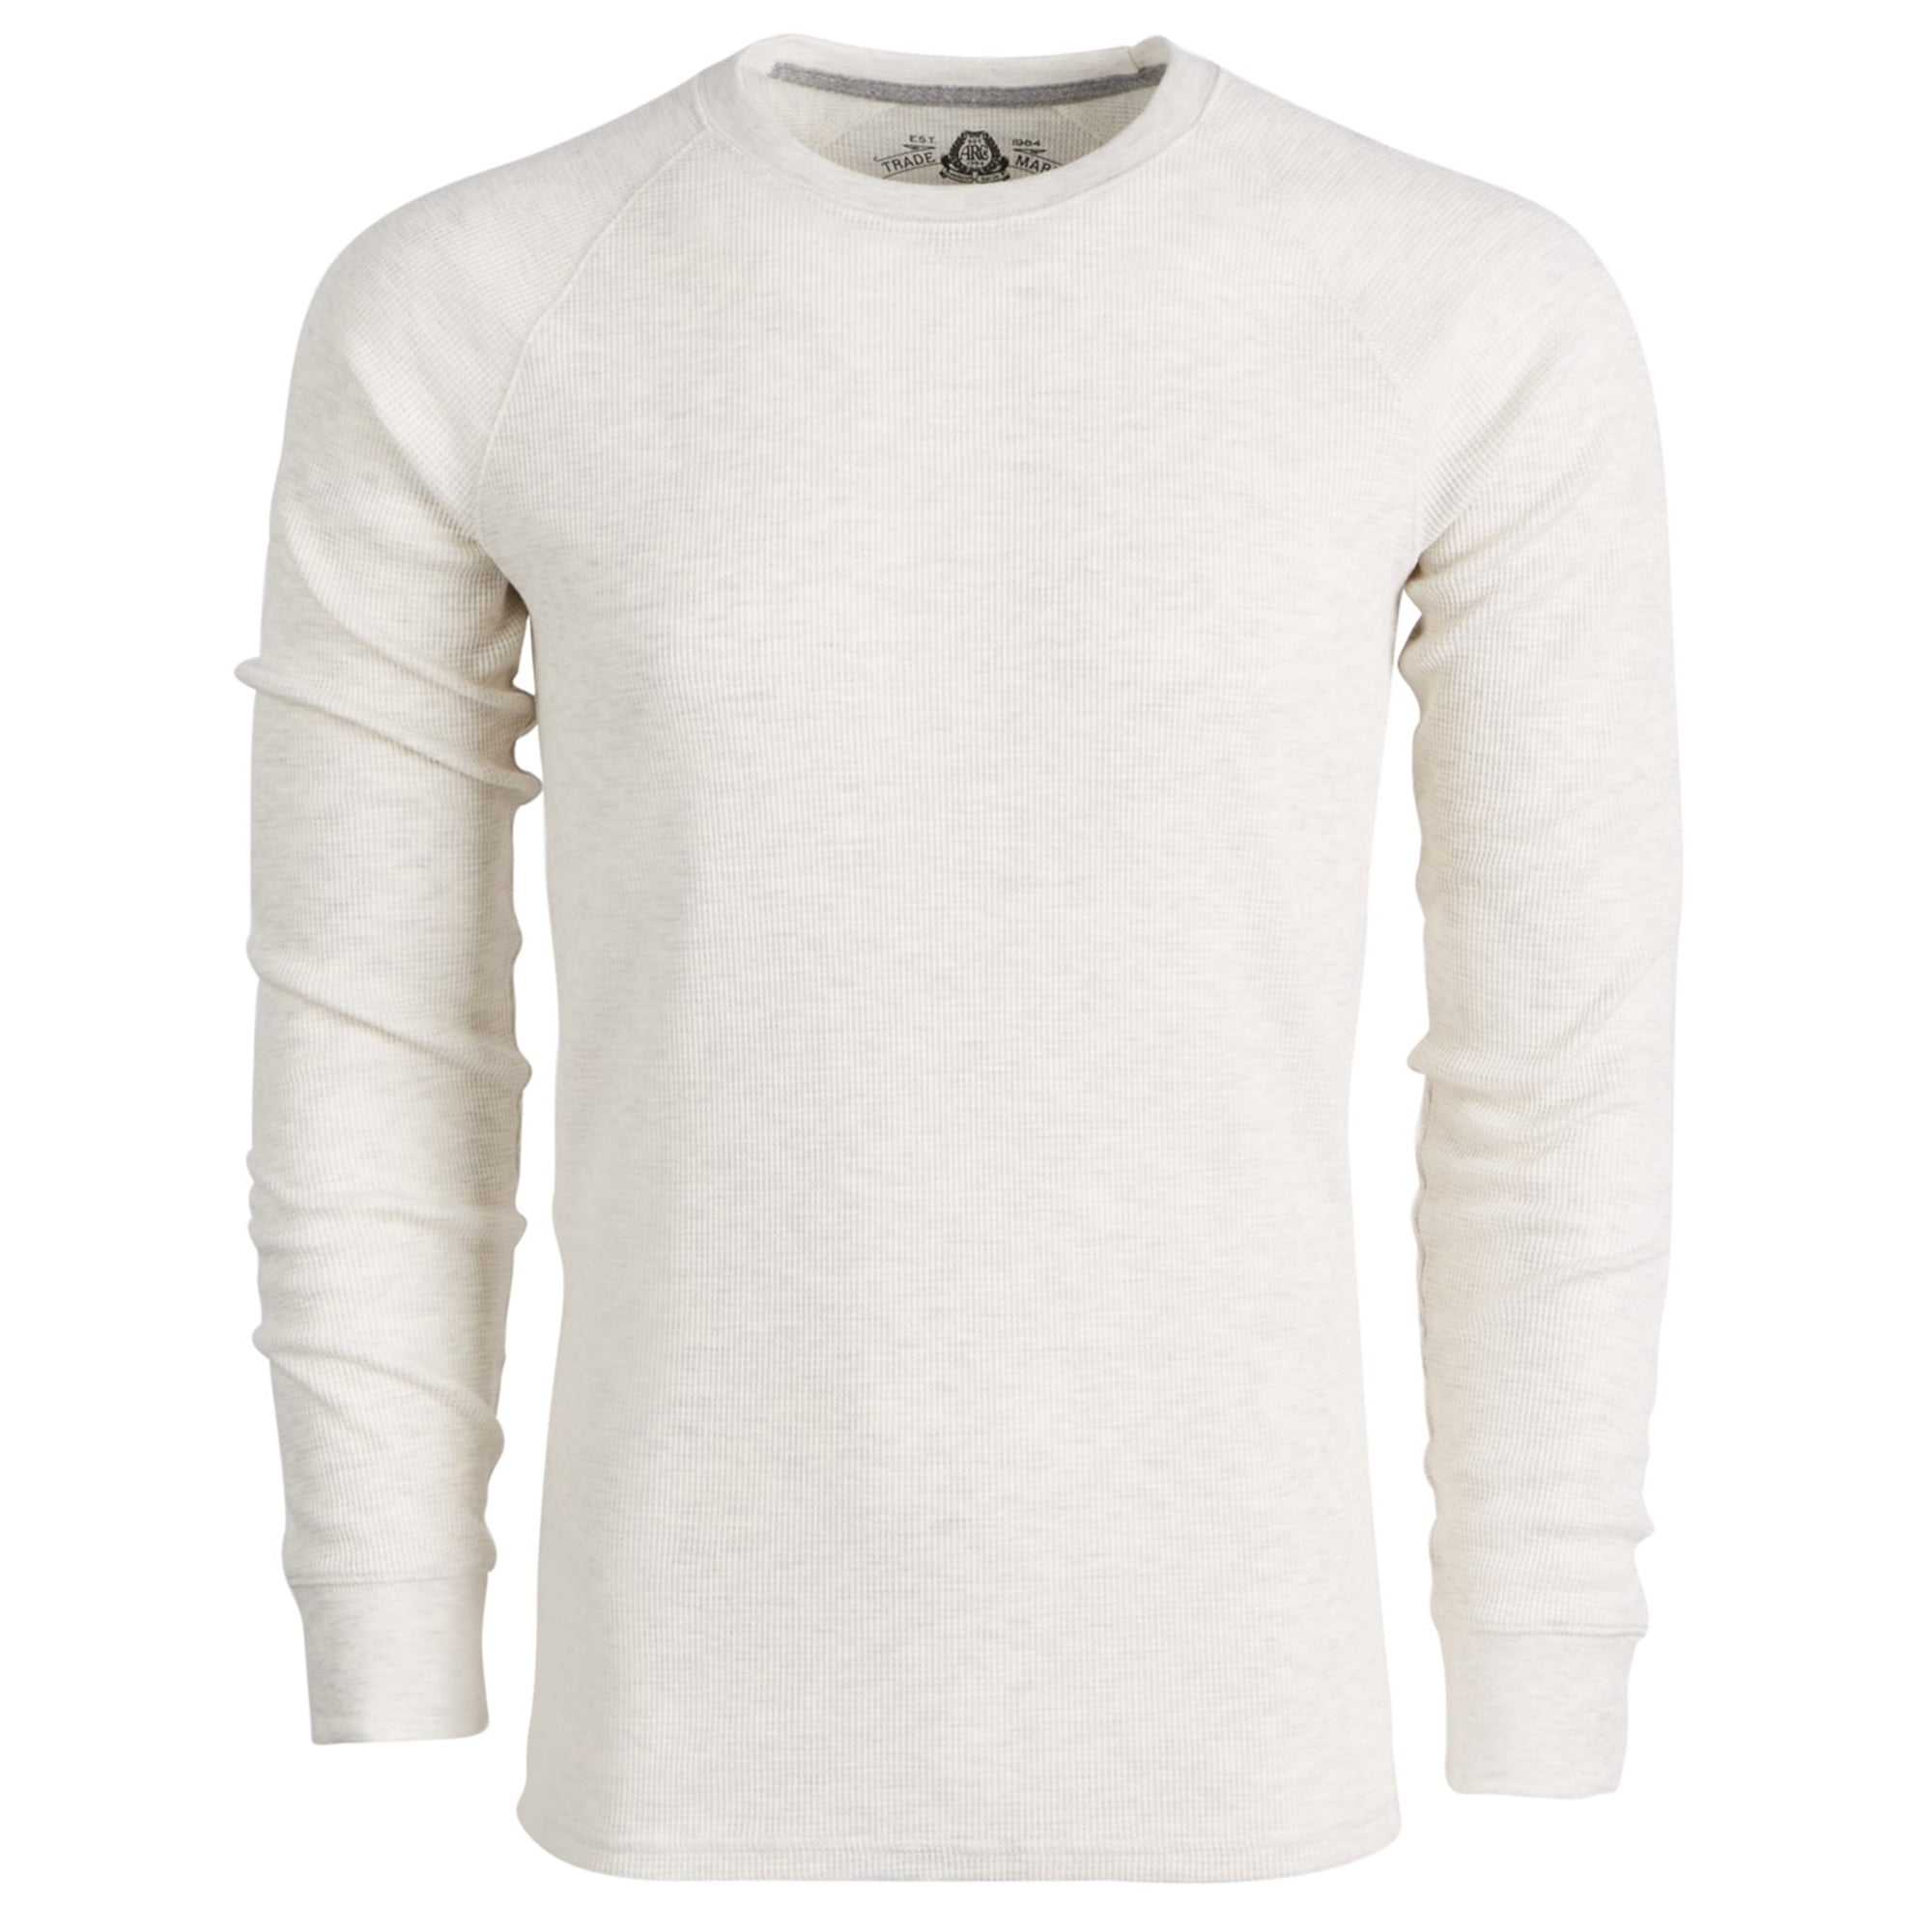 American Rag Mens Long-Sleeve Thermal Basic T-Shirt, Off-White, Small ...